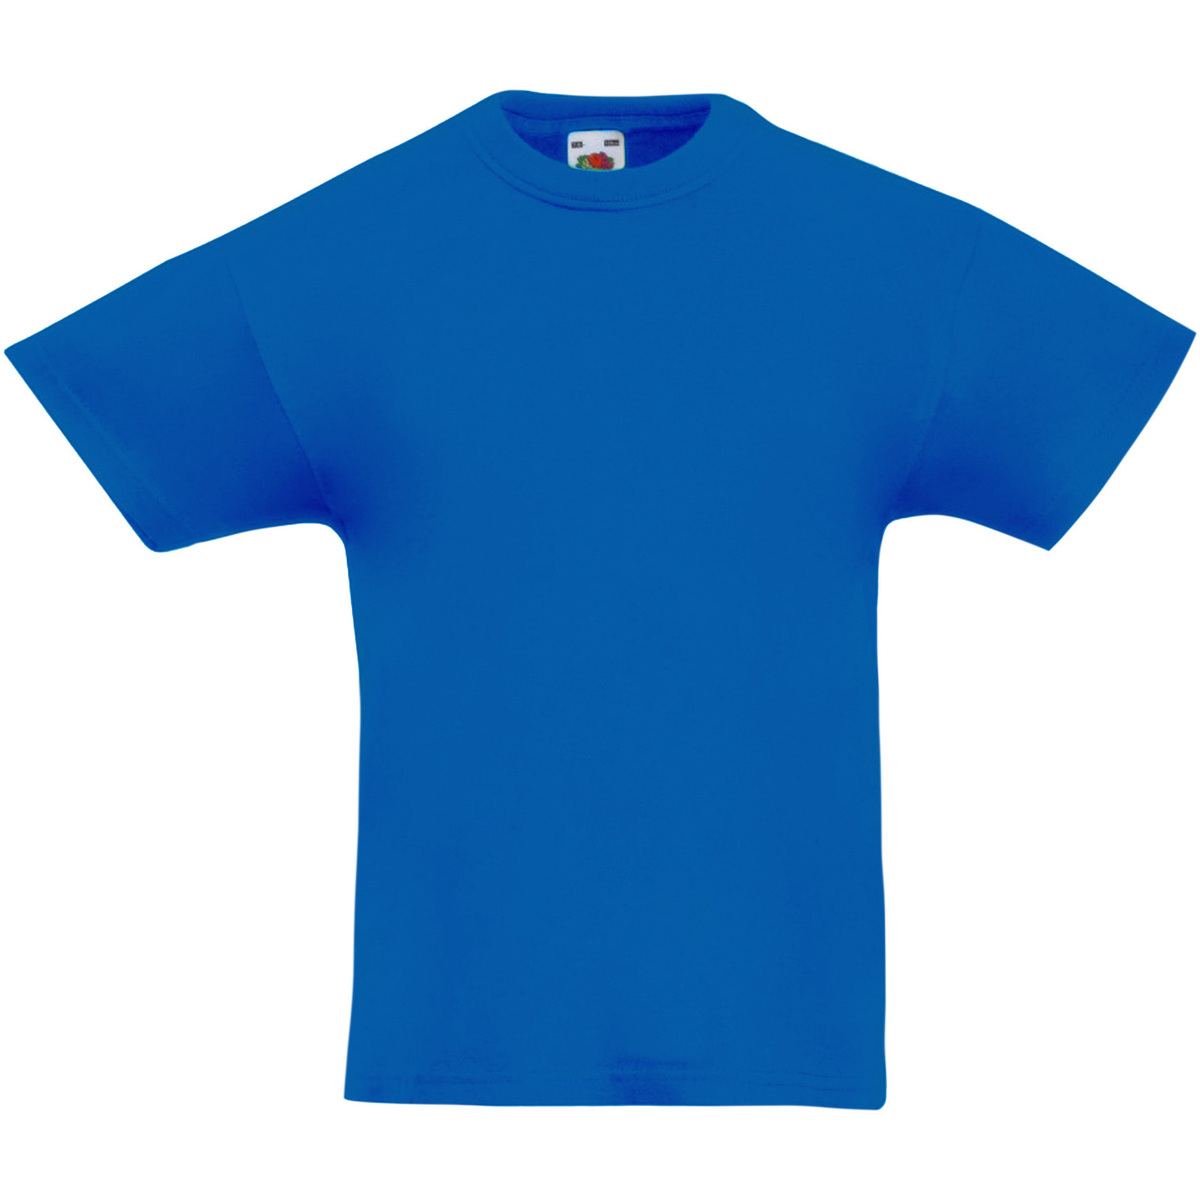 Vêtements Enfant zadig voltaire kids teen kita logo print t shirt item 61019 Bleu